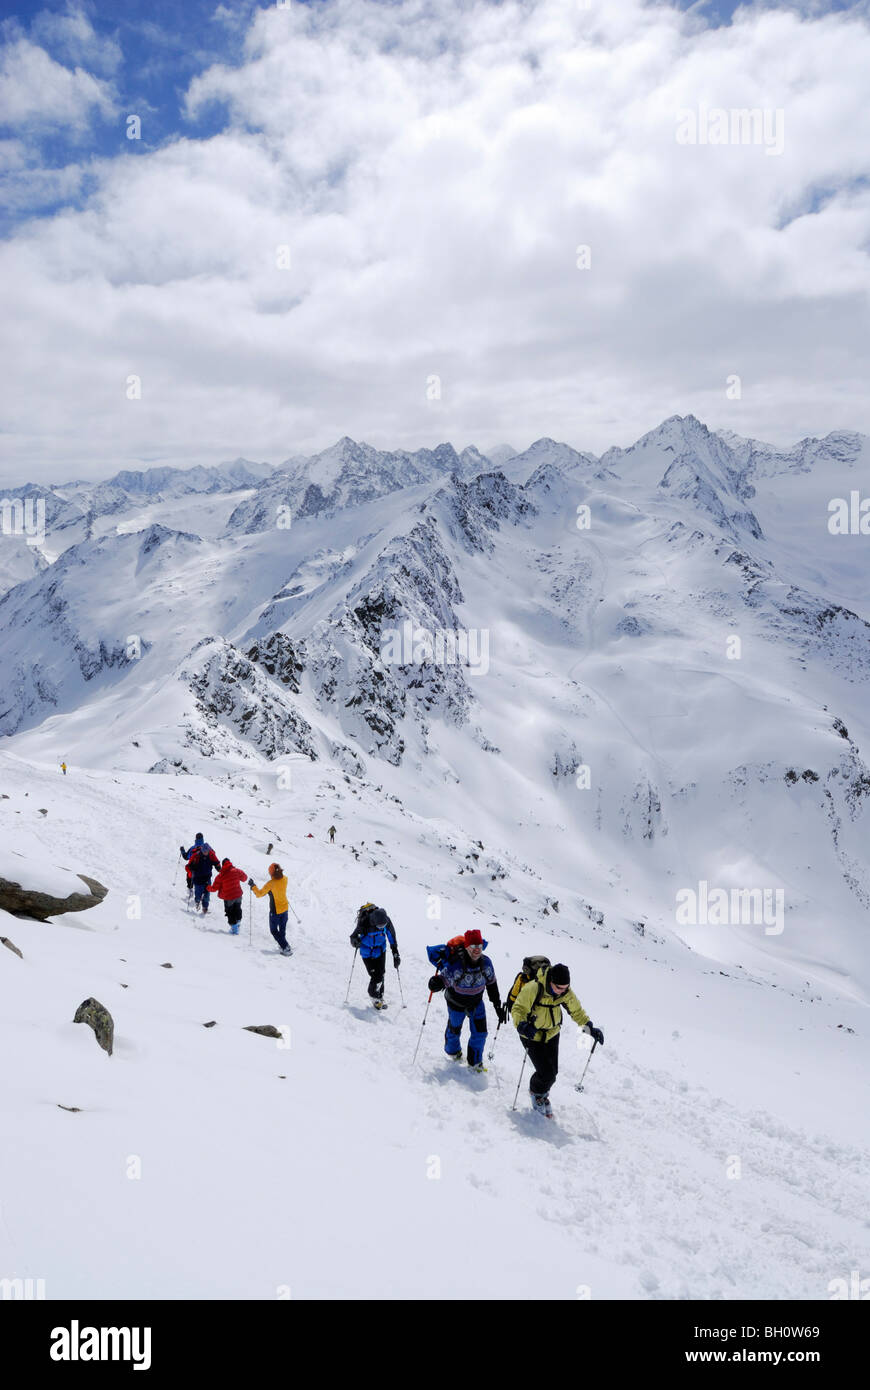 Group of backcountry skiers ascending and descending summit of Lamsenspitze, Sellrain, Stubai range, Tyrol, Austria Stock Photo